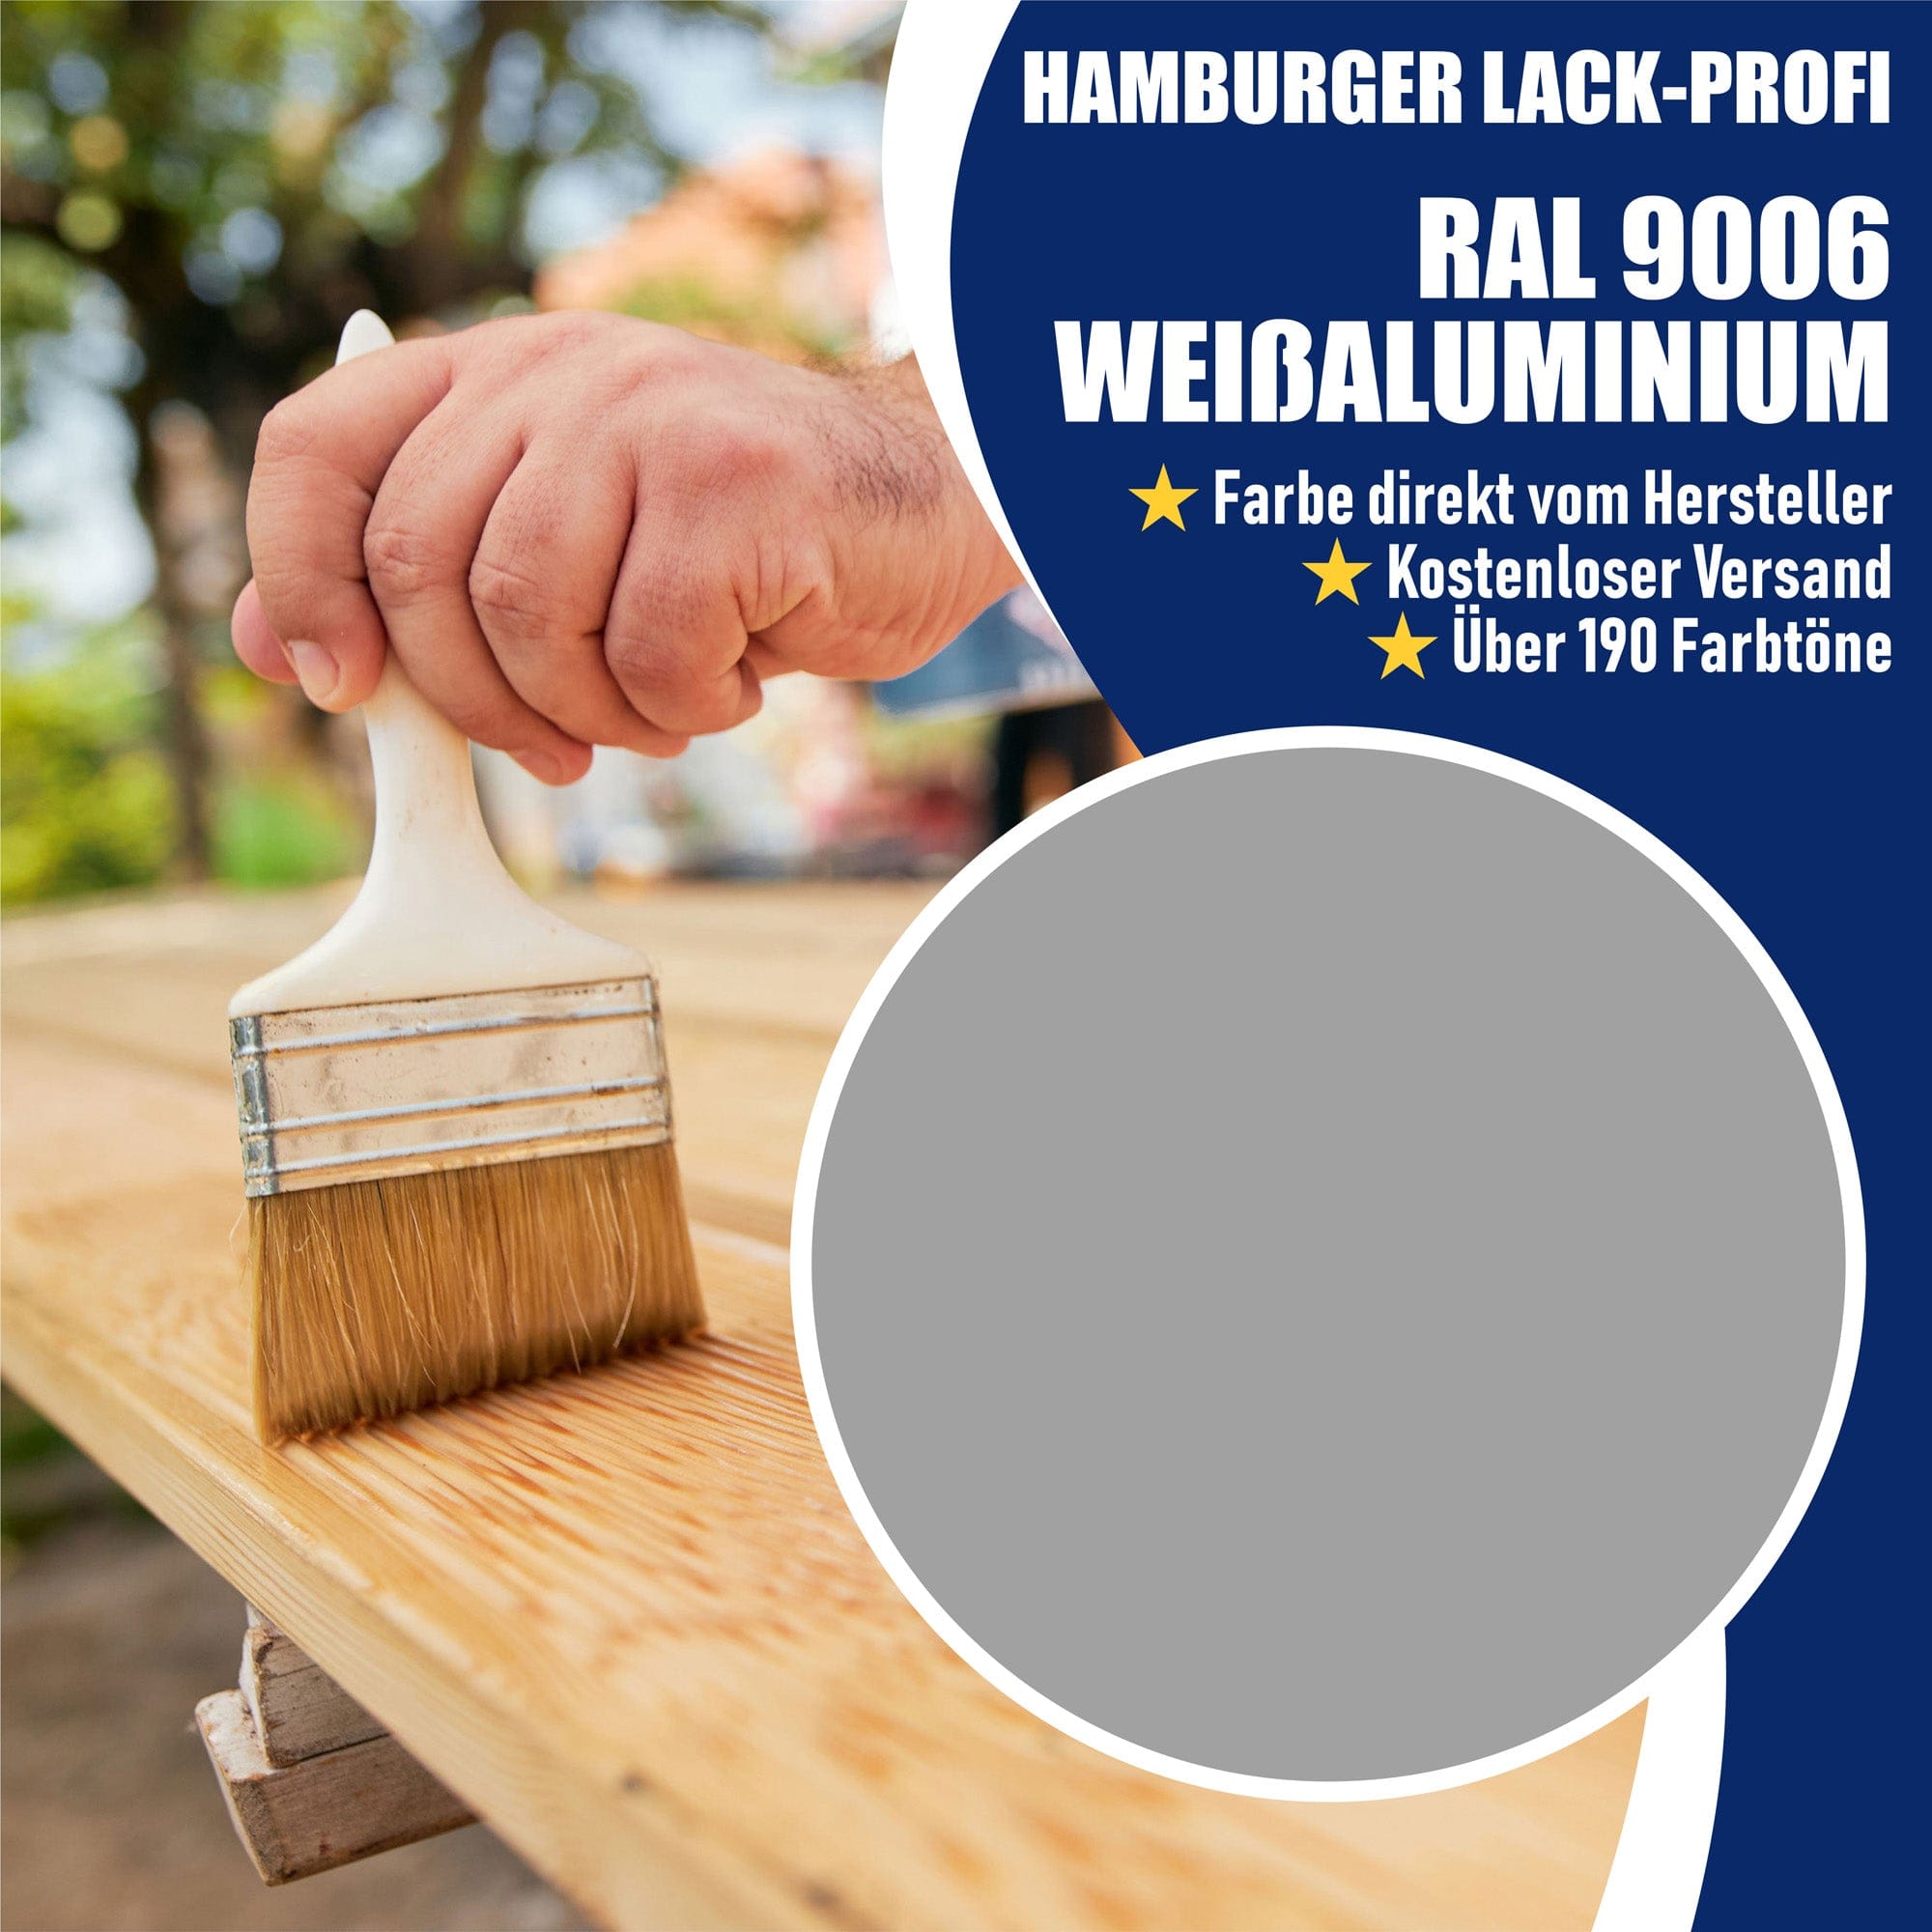 Hamburger Lack-Profi Lacke & Beschichtungen Hamburger Lack-Profi Bootslack Weißaluminium RAL 9006